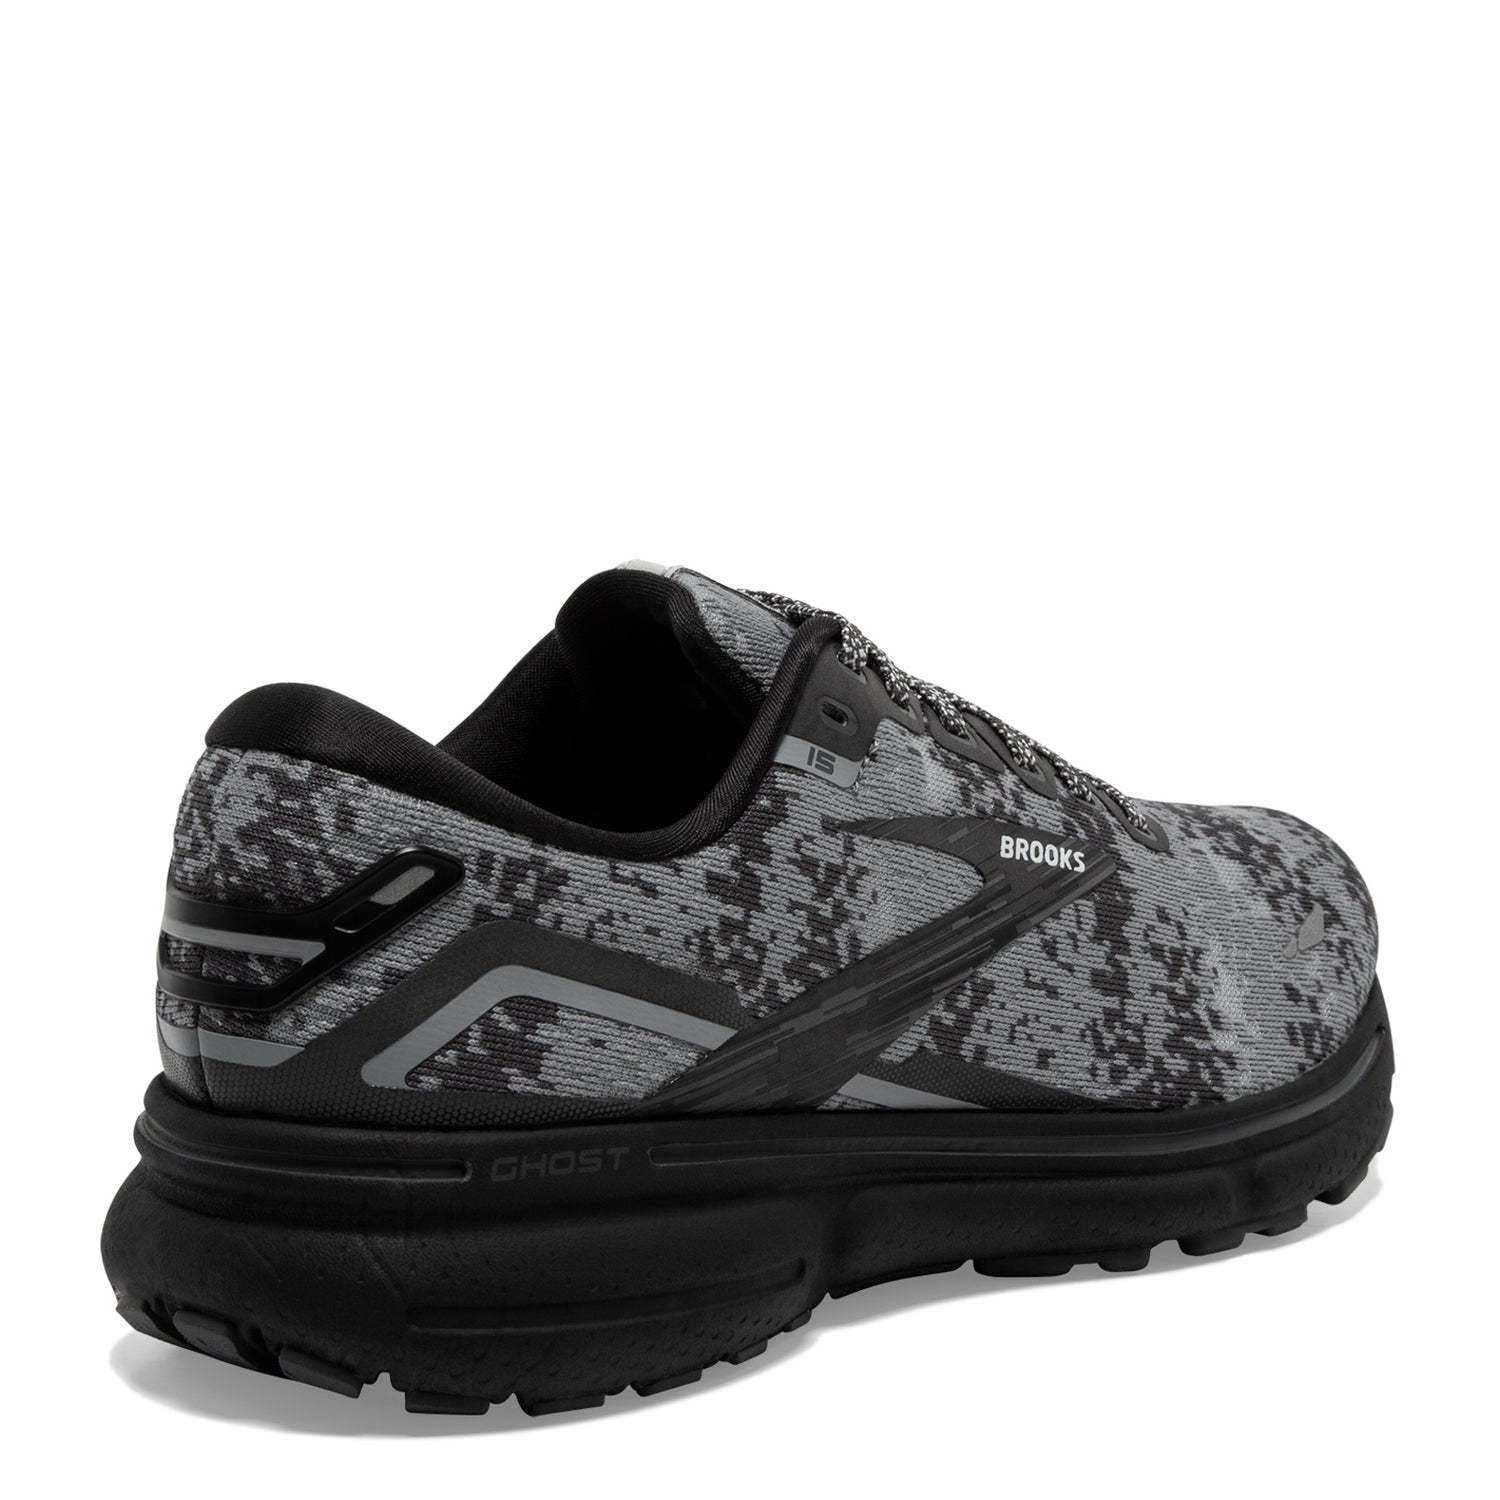 Peltz Shoes  Women's Brooks Ghost 15 Running Shoe Black/Oyster/Primer 120380 1B 054